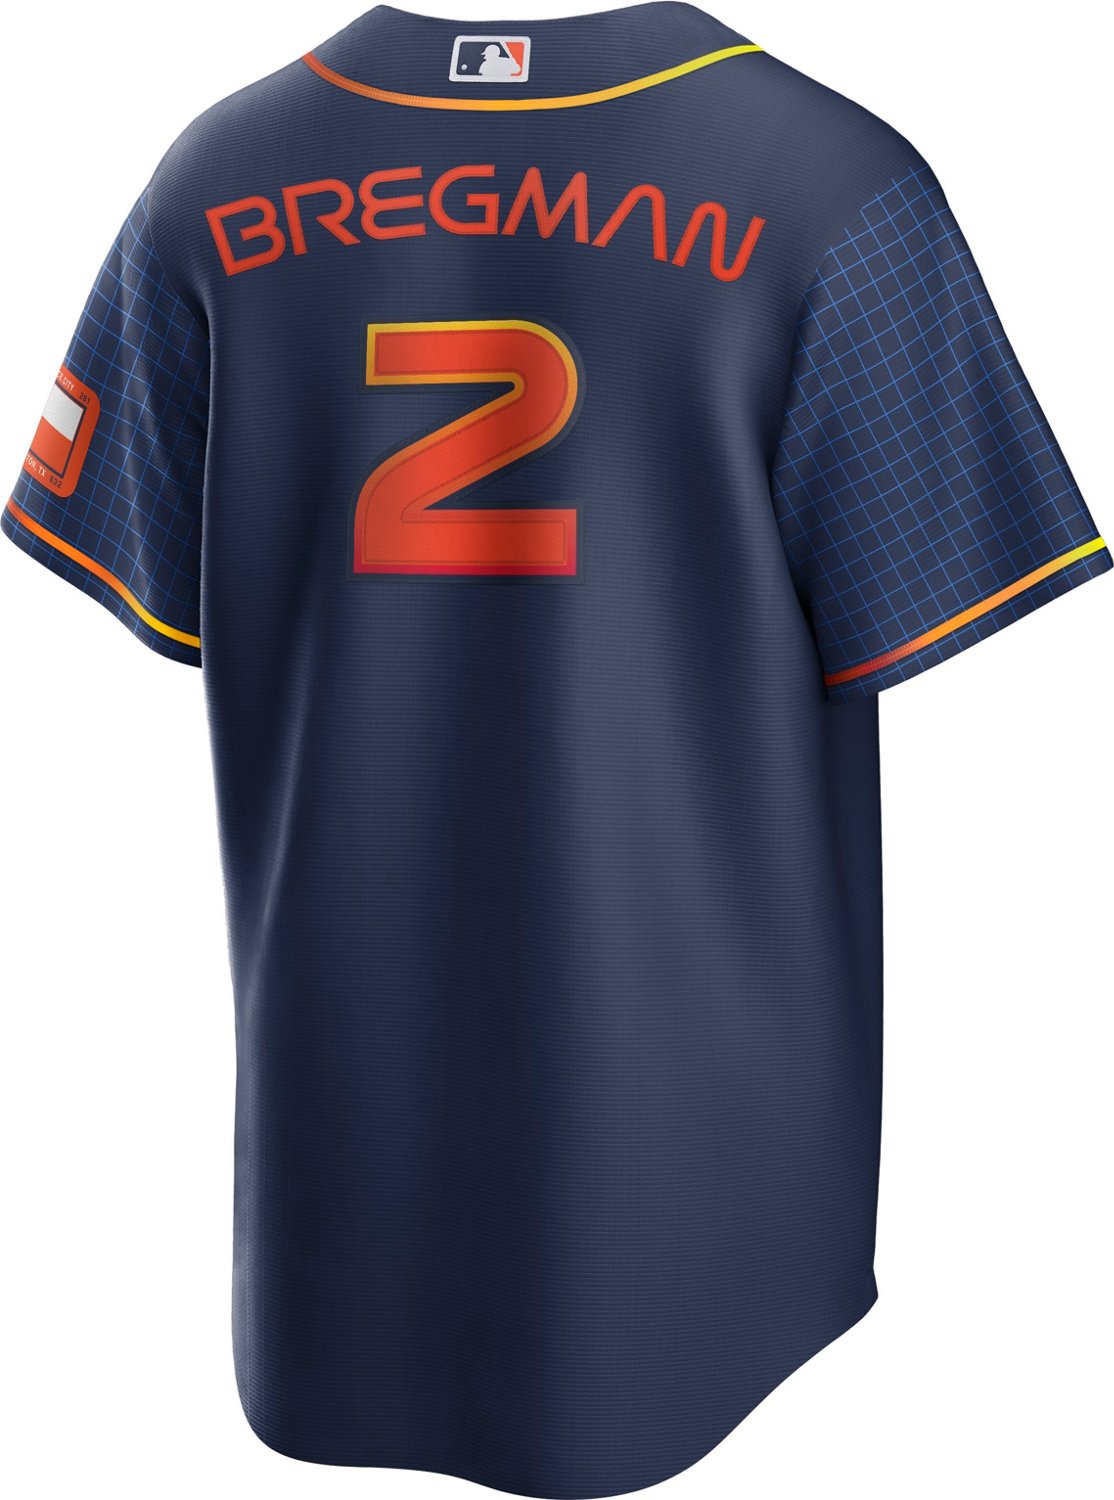 alex bregman throwback jersey